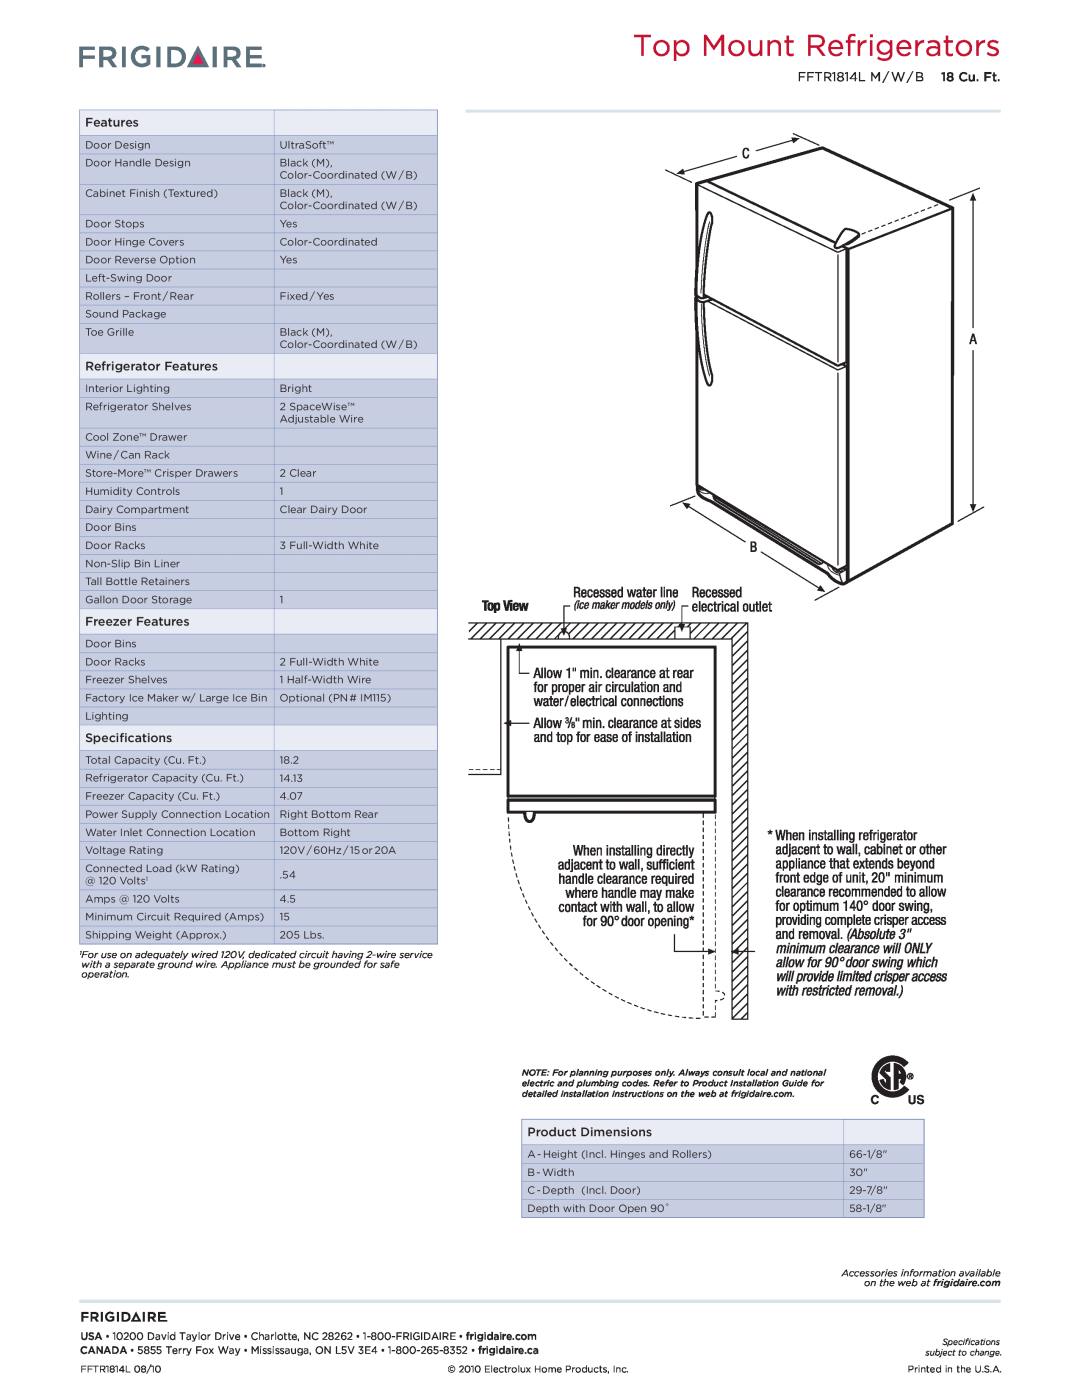 Frigidaire FFTR1814B Top Mount Refrigerators, FFTR1814L M / W / B 18 Cu. Ft, Refrigerator Features, Freezer Features 